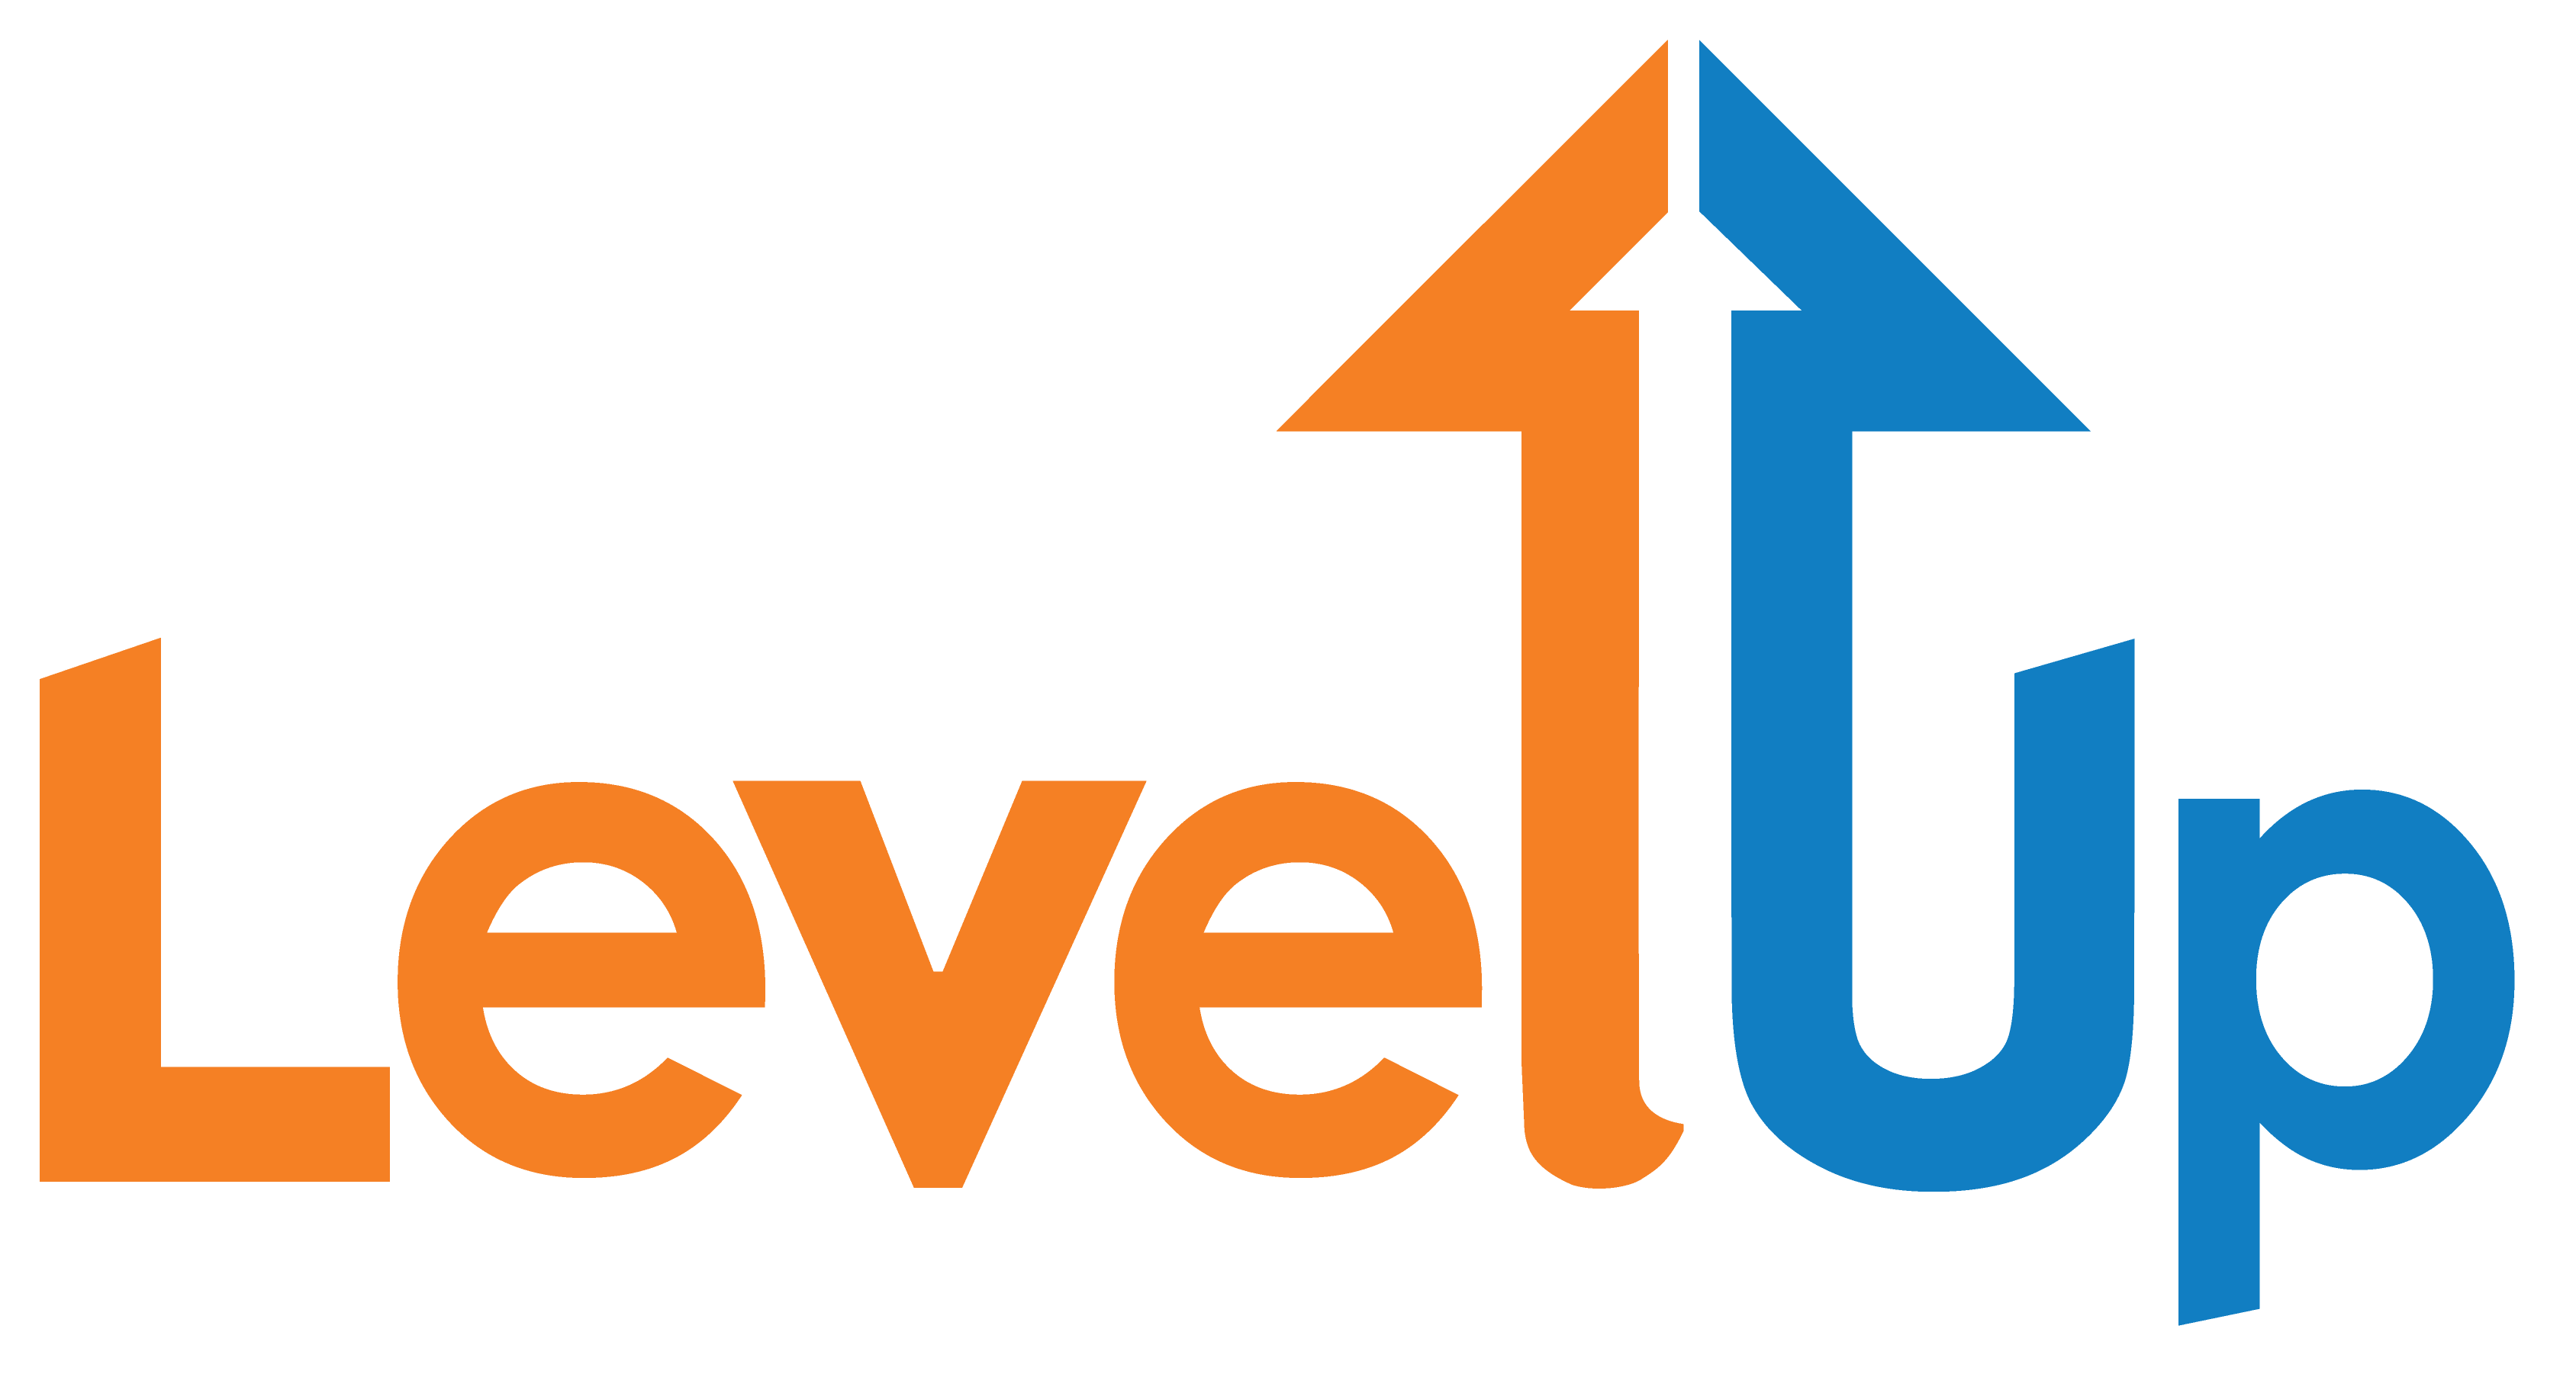 Www level. Up логотип. Lvl логотип. Логотип вверх. Level up лого.